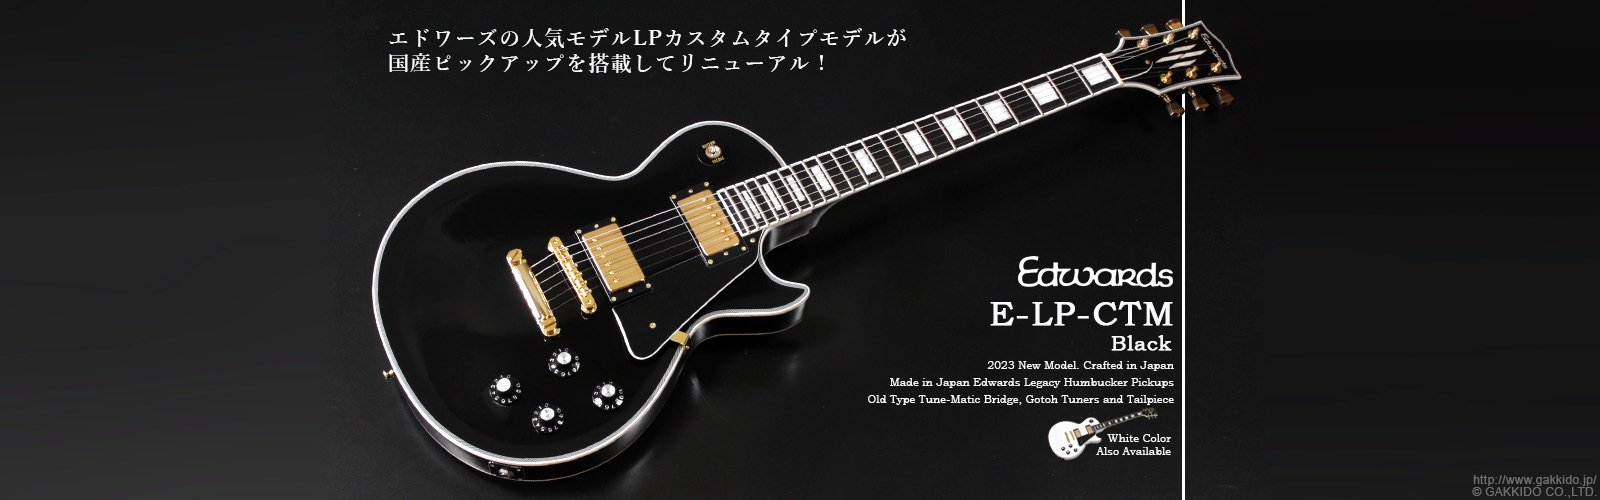 Edwards　E-LP-CTM BK [Black]